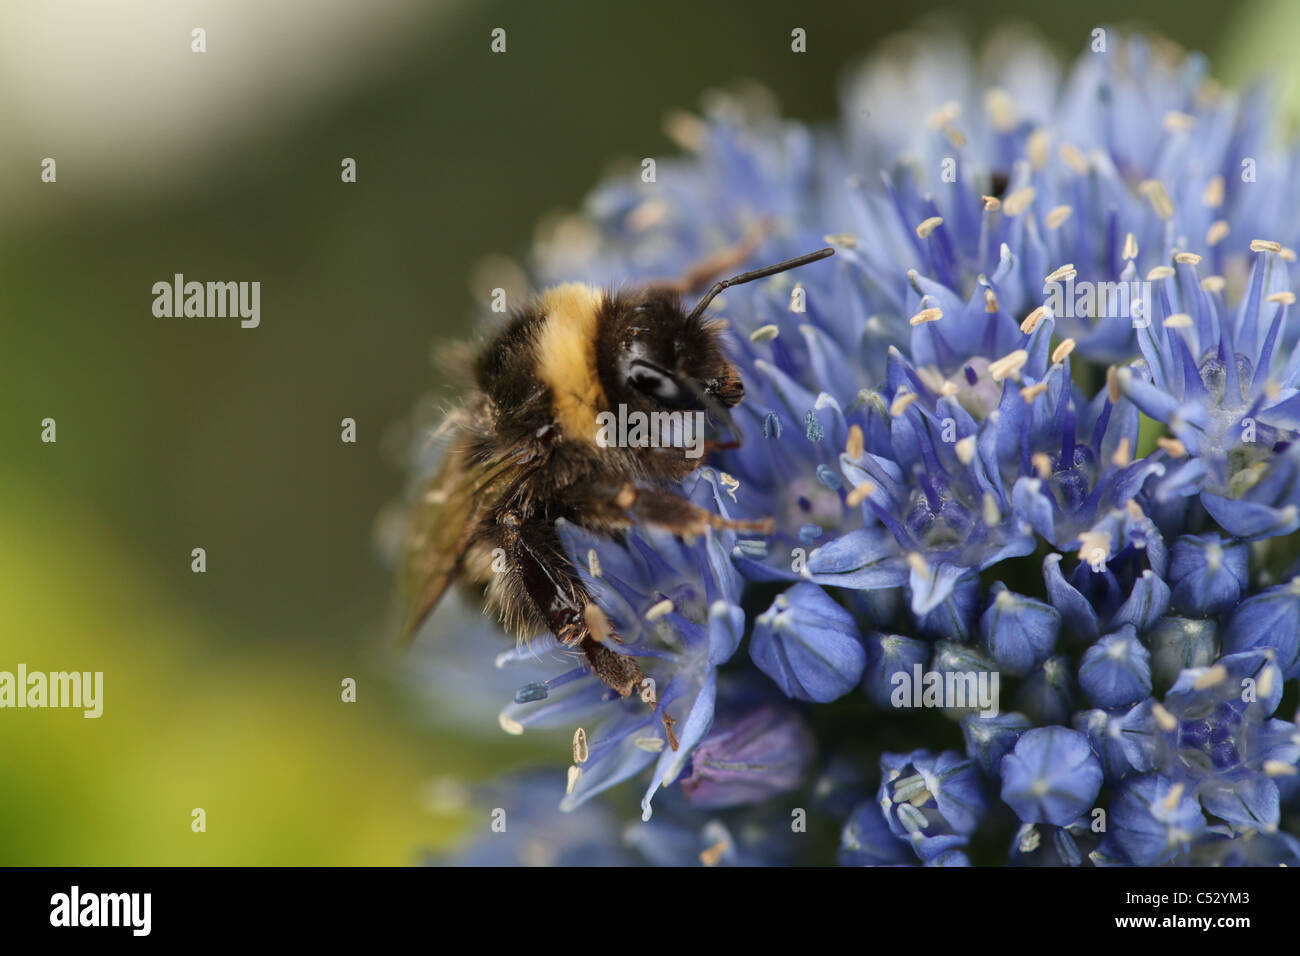 Macro of a Buff-tailed Bumblebee (Bombus terrestris) on an allium caeruleum flower, England Stock Photo